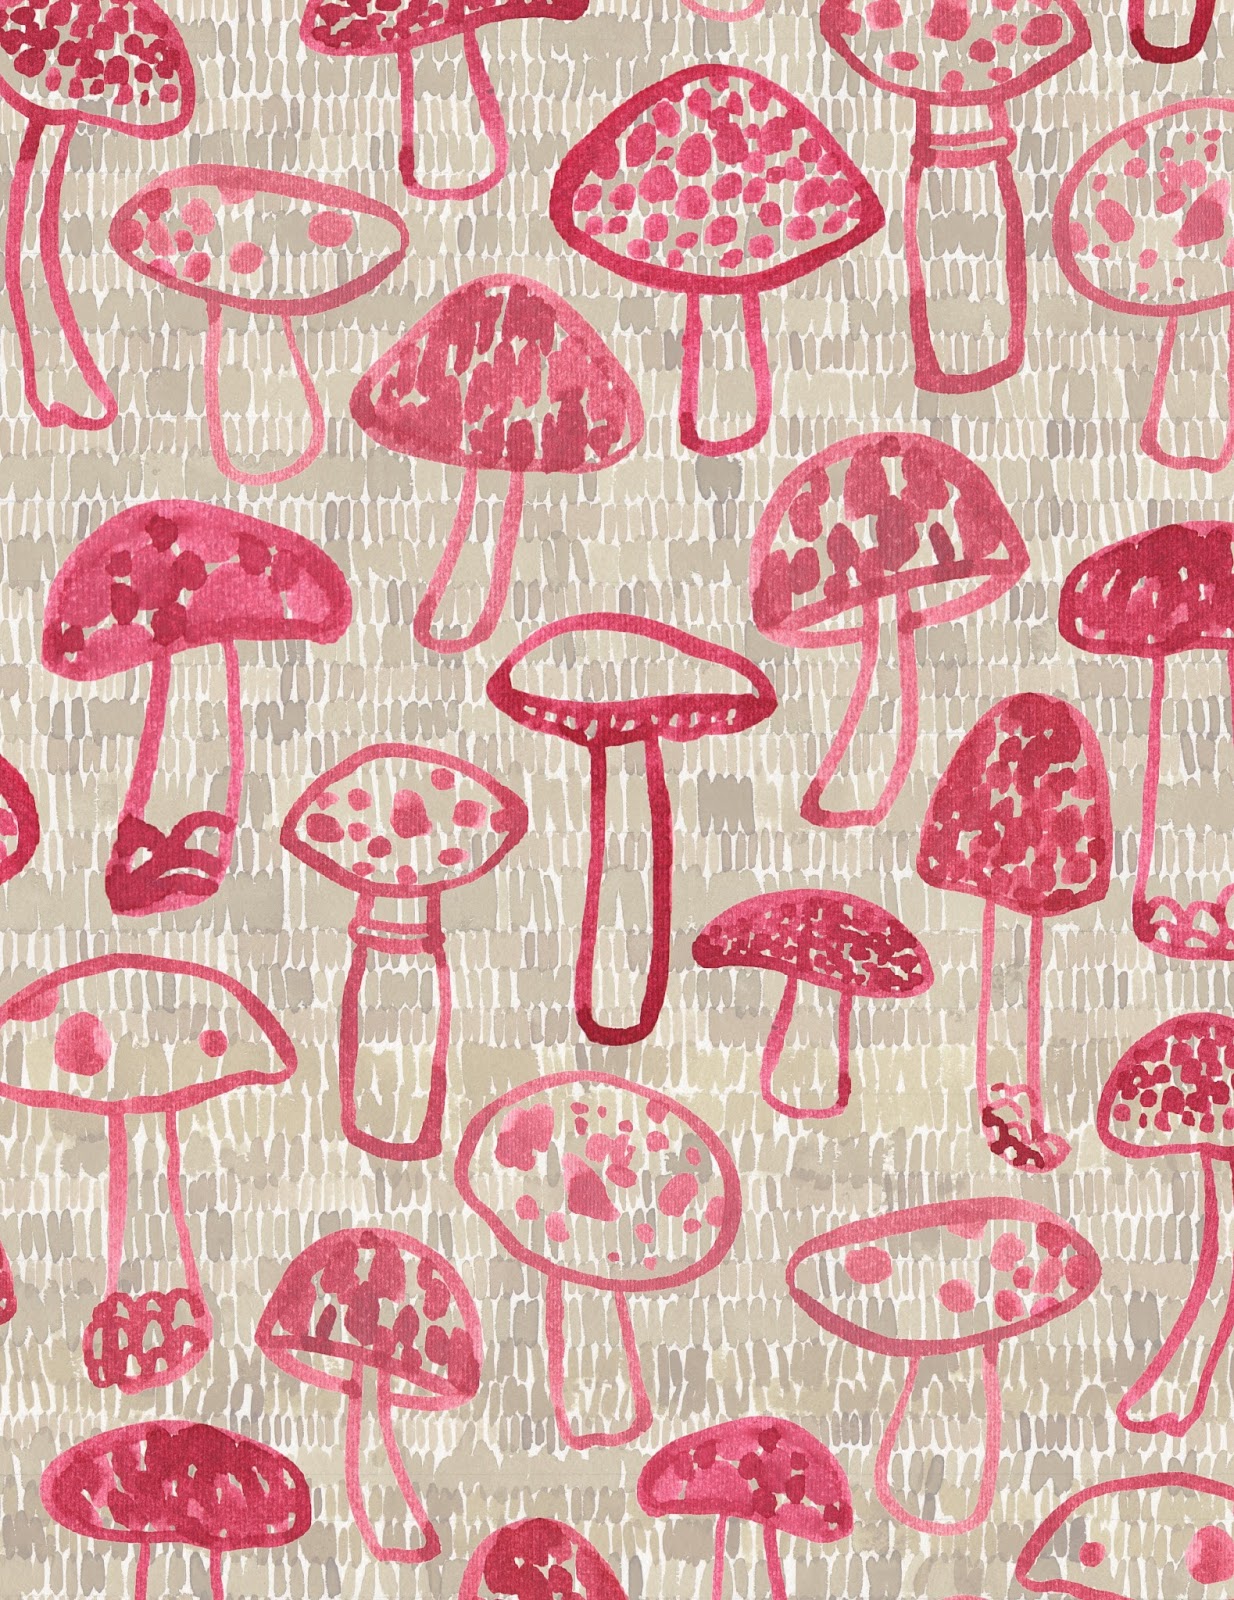 Natalie's Sketchbook: Mushroom Spotting